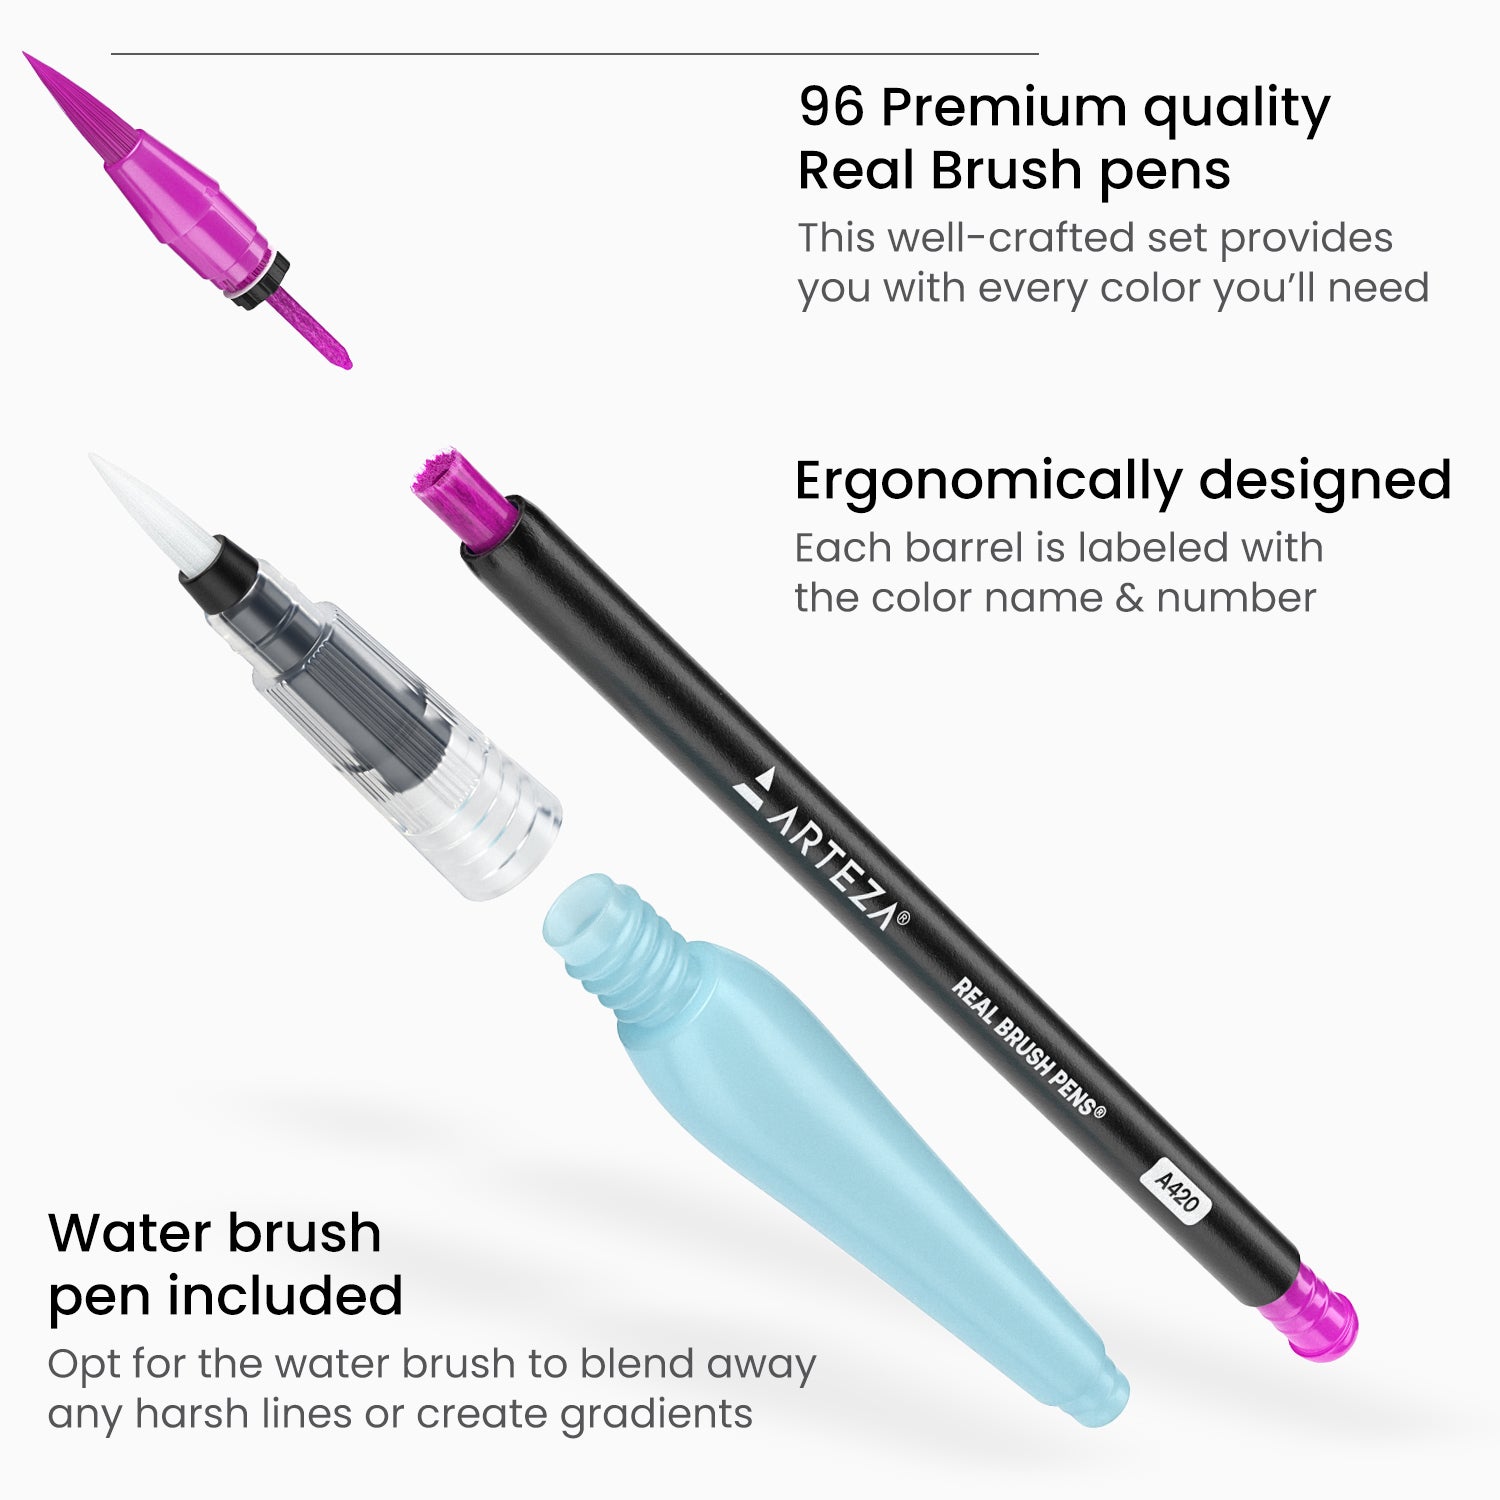 9 Best Brush Pens For Calligraphy